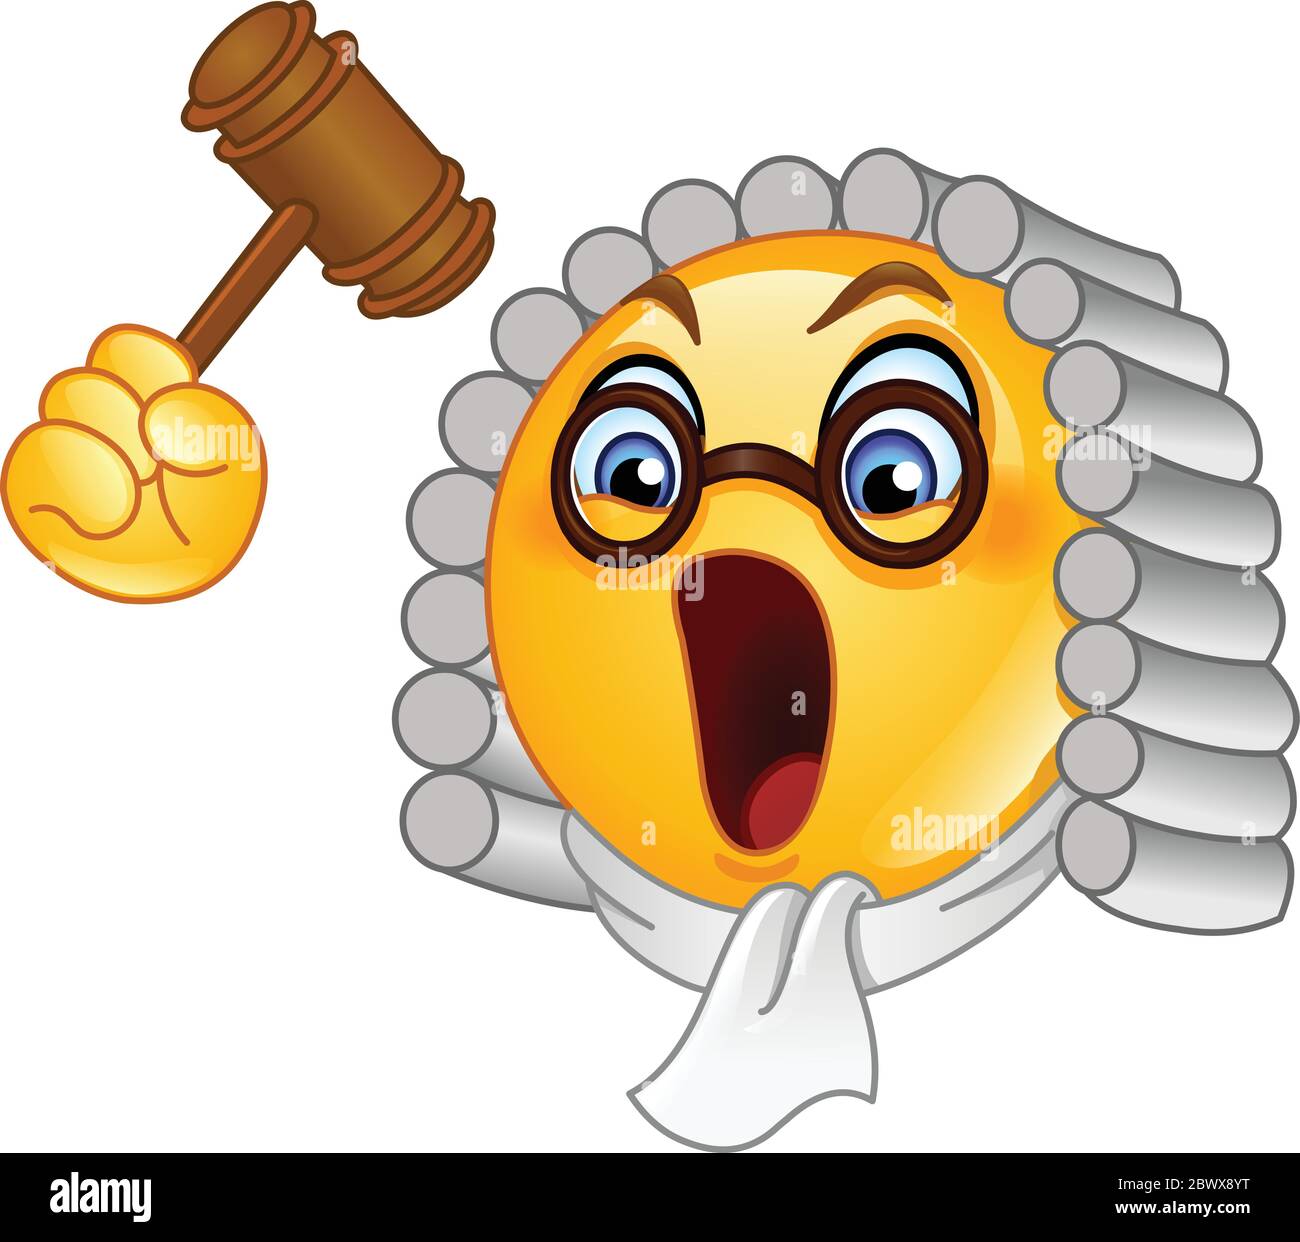 Judge emoticon with hammer Stock Vector